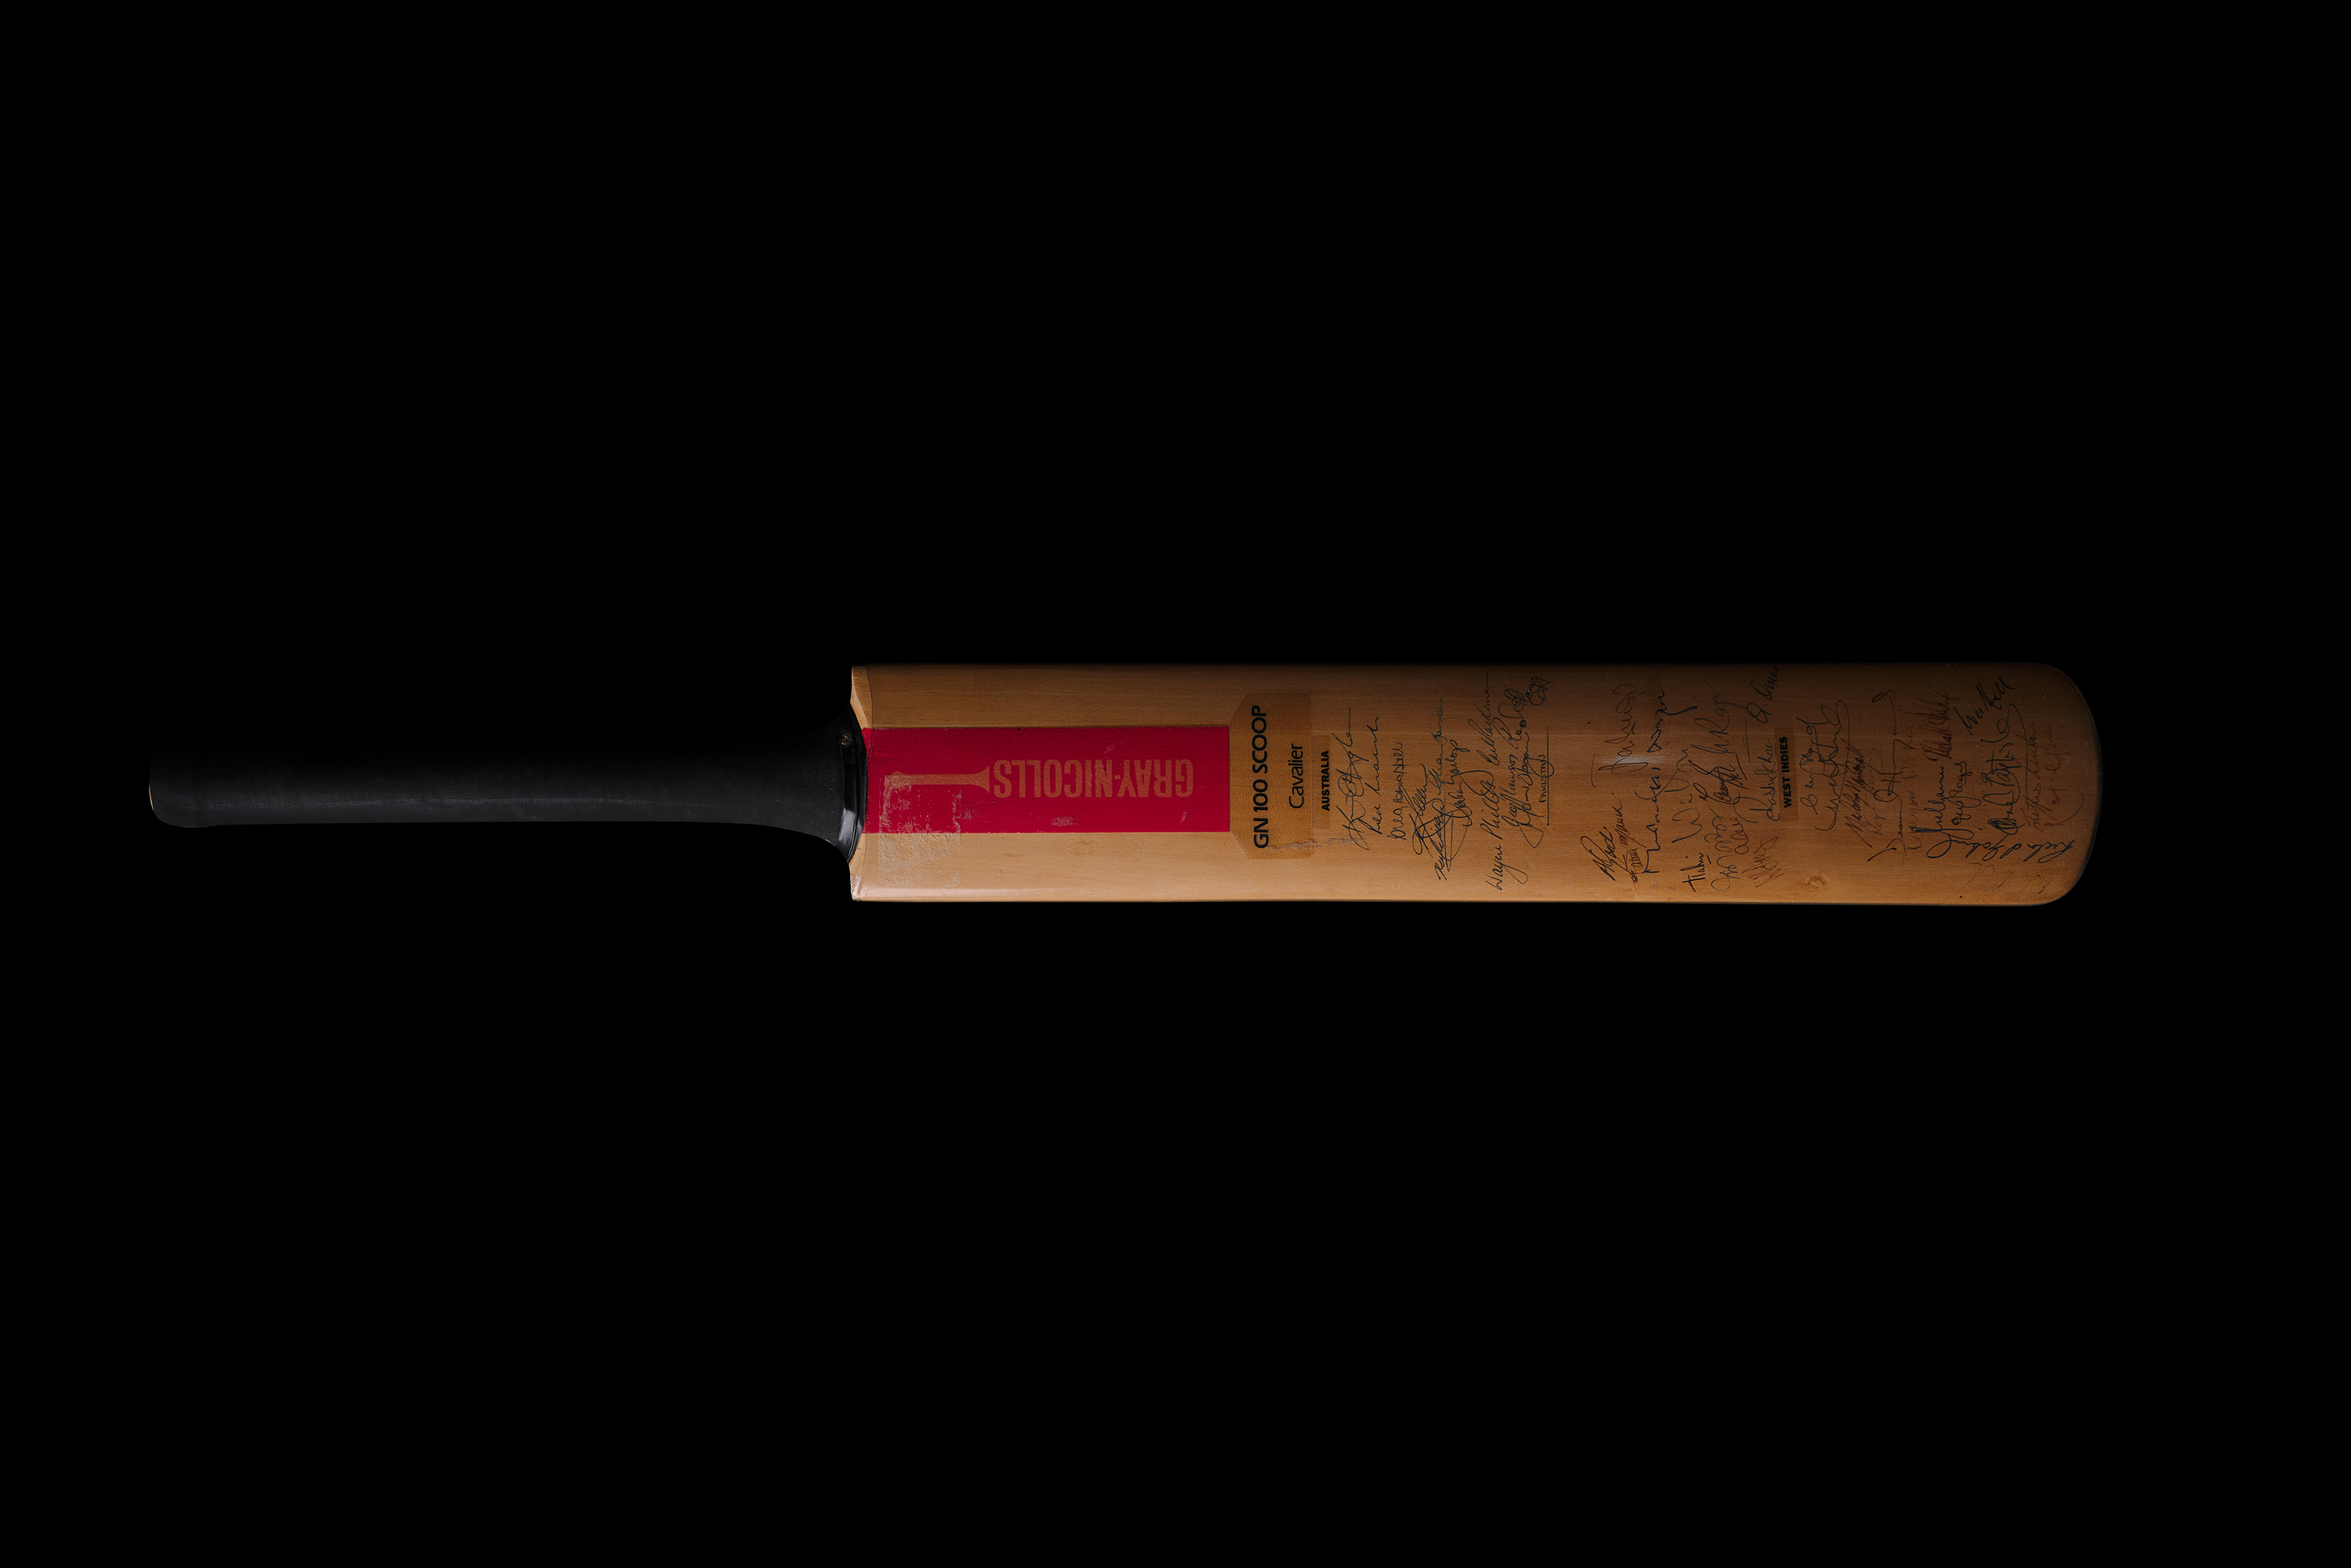 a cricket bat